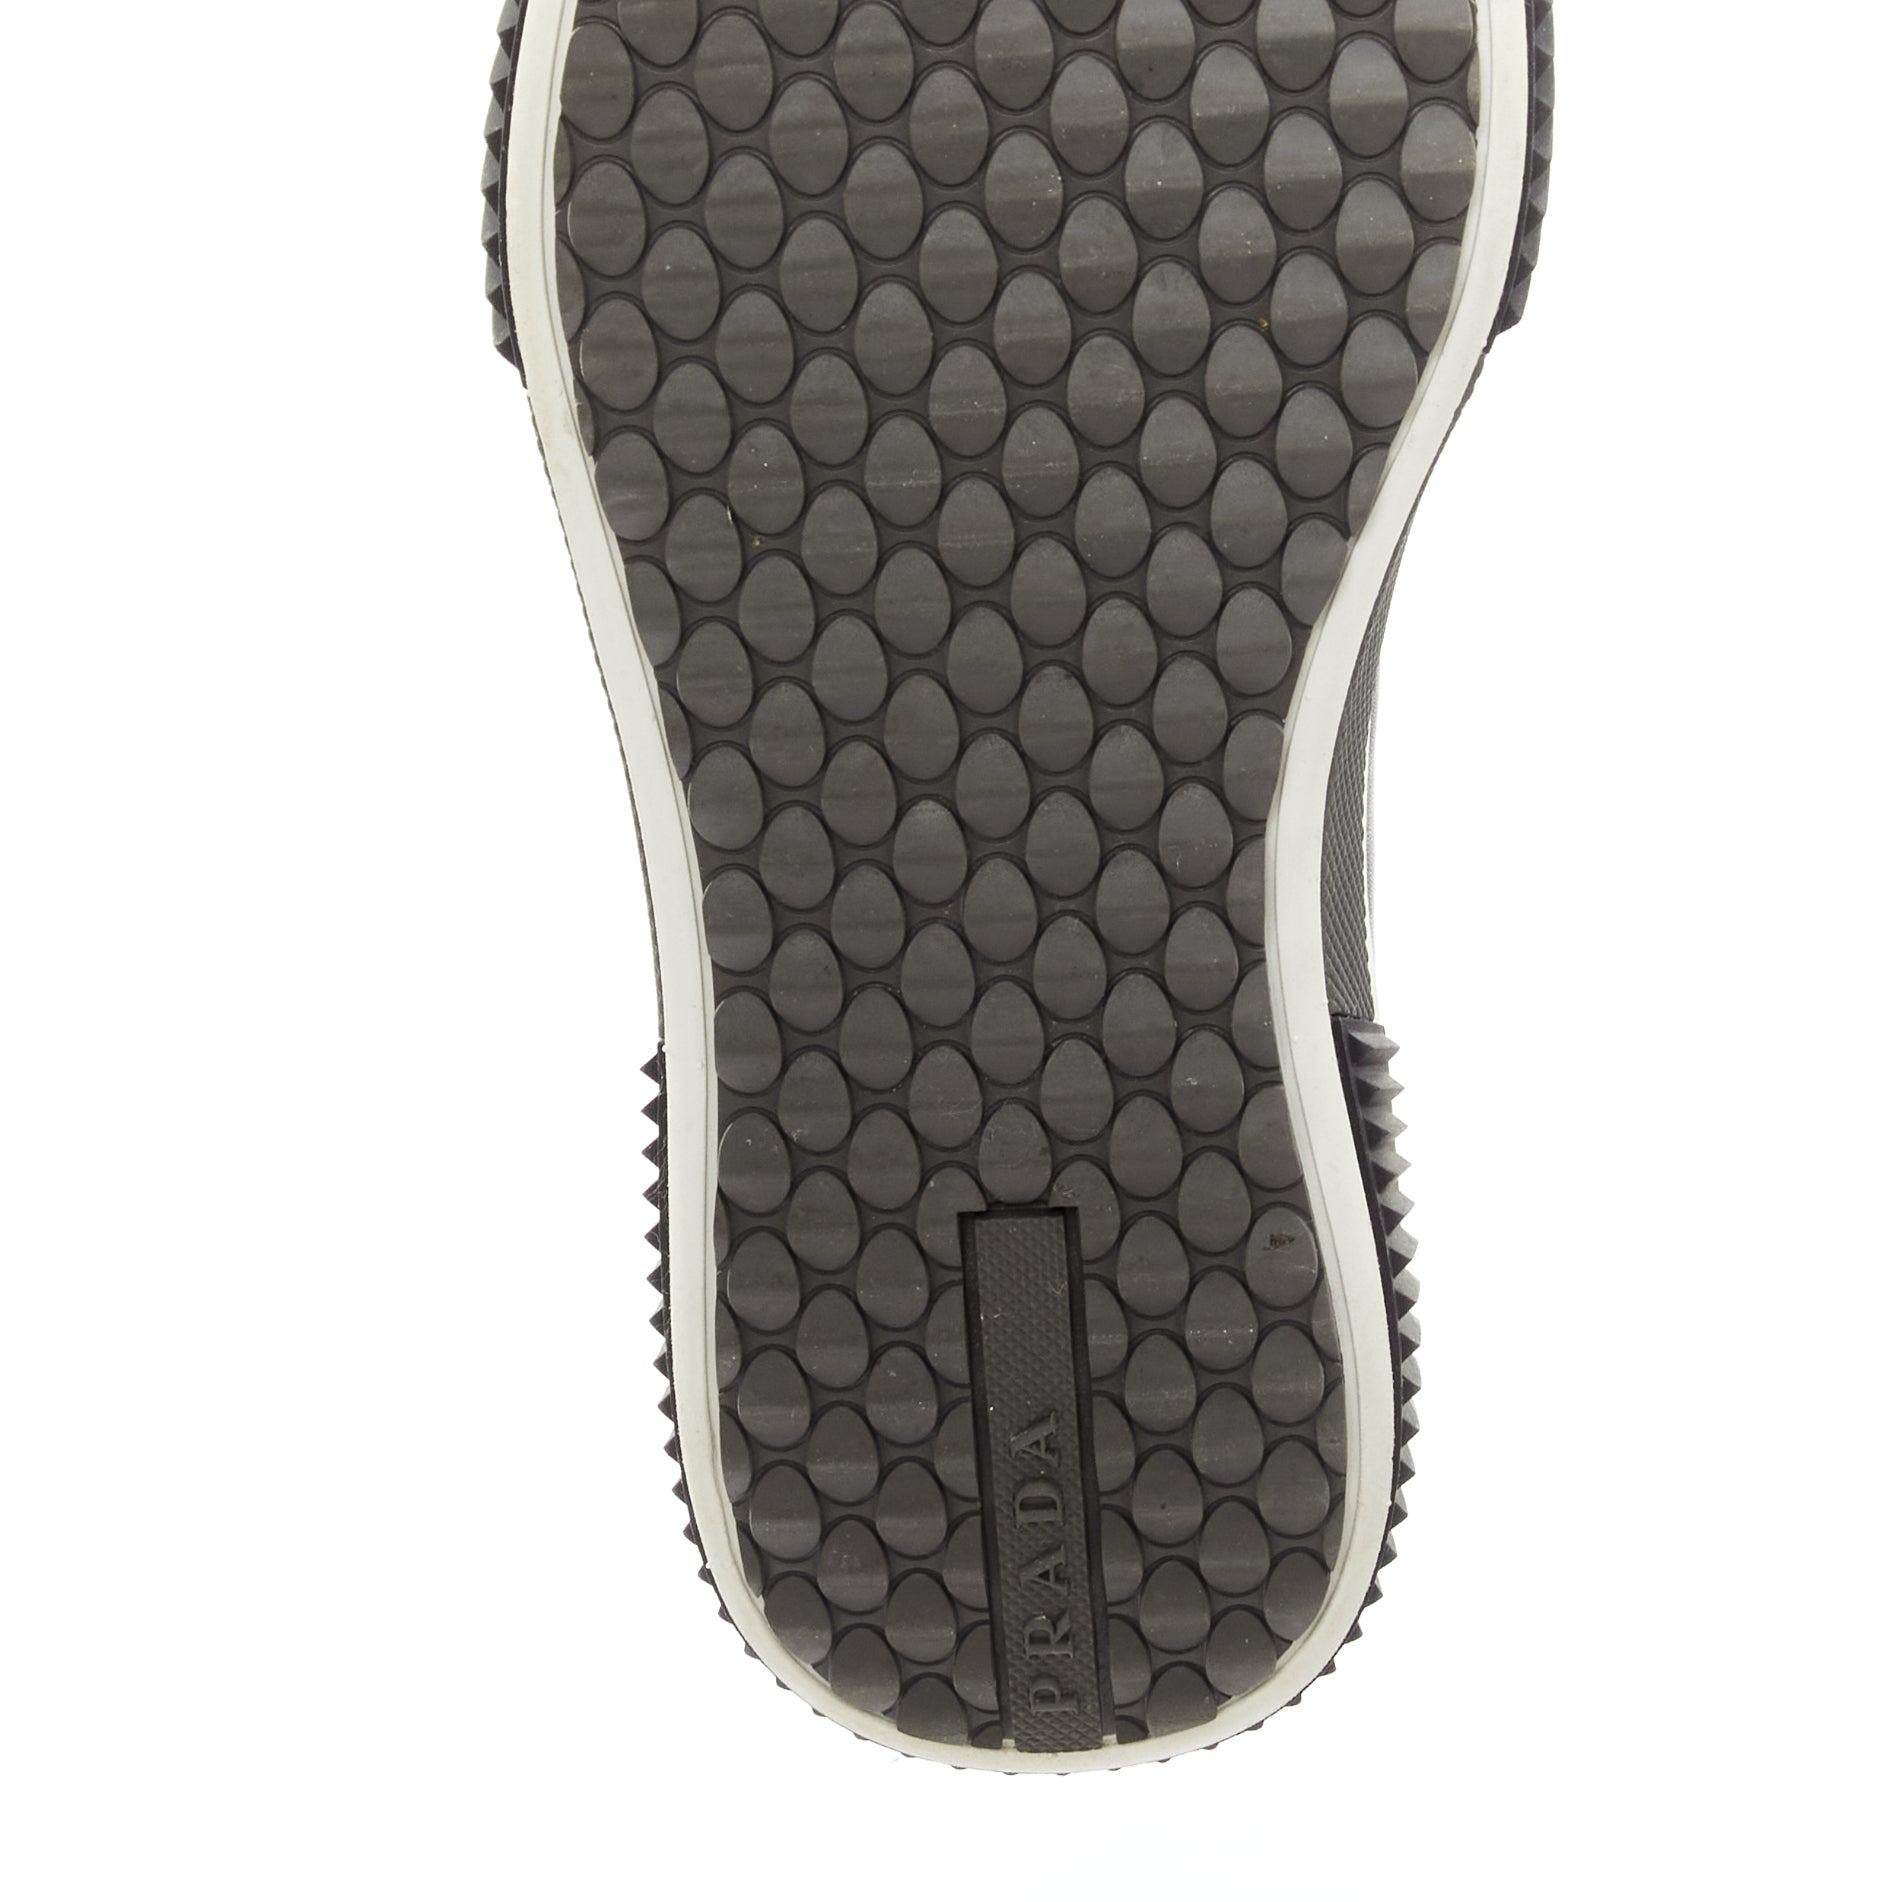 PRADA Stratus black grey suede leather low top sneakers UK5.5 EU39.5 For Sale 5